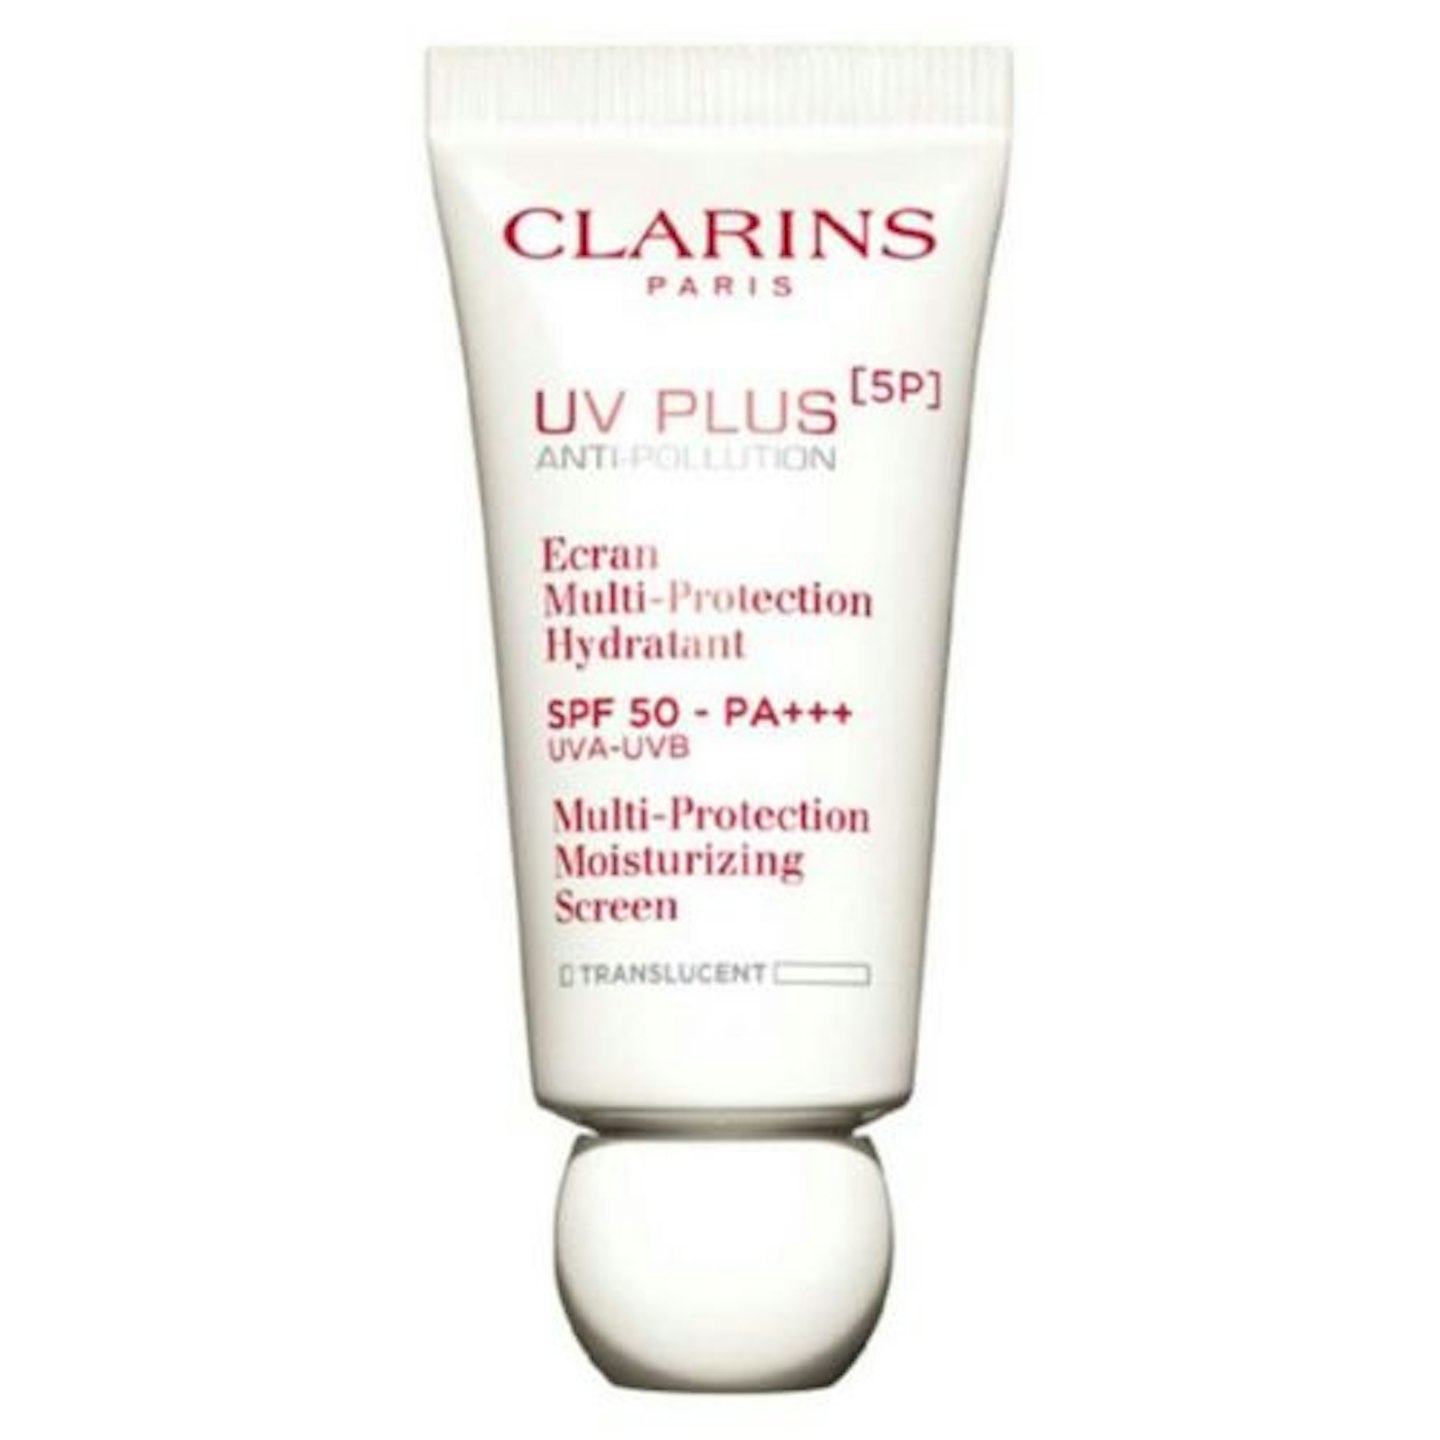 Best anti-ageing sunscreen: Clarins - UV PLUS Anti-Pollution SPF 50 Translucent 